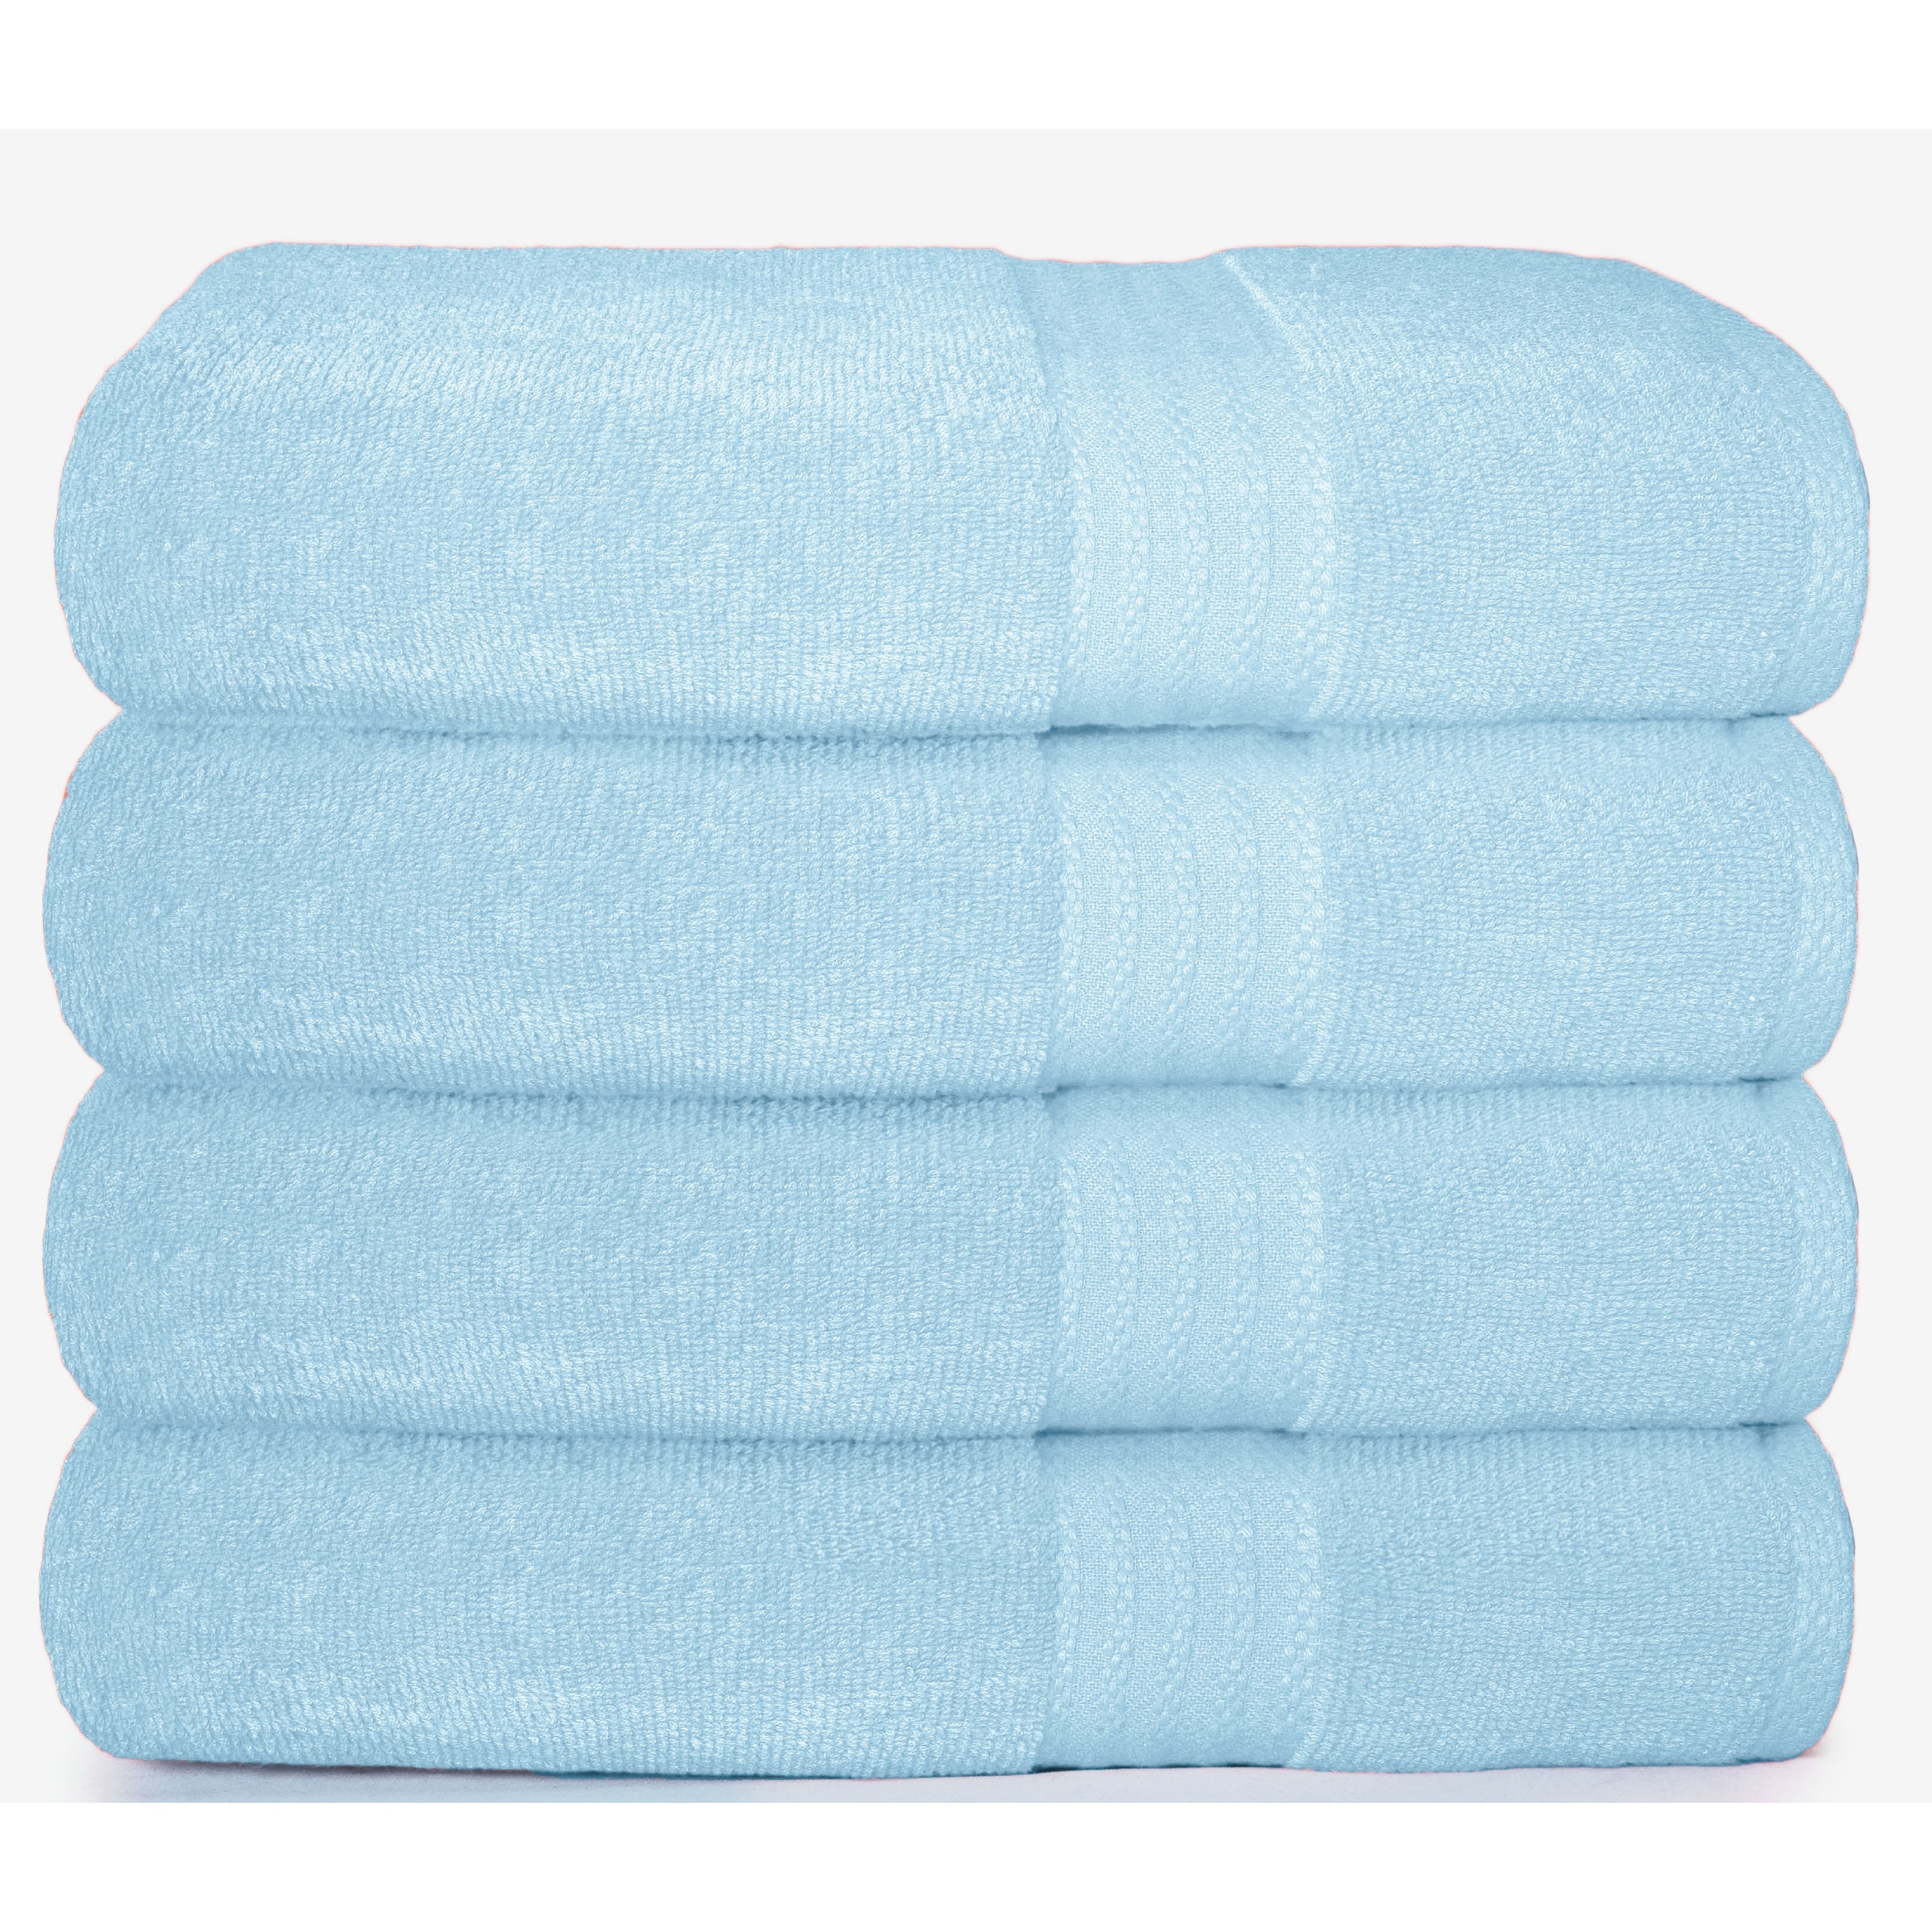 https://ak1.ostkcdn.com/images/products/30363975/Glamburg-Premium-Cotton-4-Pack-Bath-Towel-Set-100-Pure-Cotton-4-Bath-Towels-27x54-Ultra-Soft-Highly-Absorbent-0a3b05fb-d0f8-46fe-aed6-817015b6835a.jpg